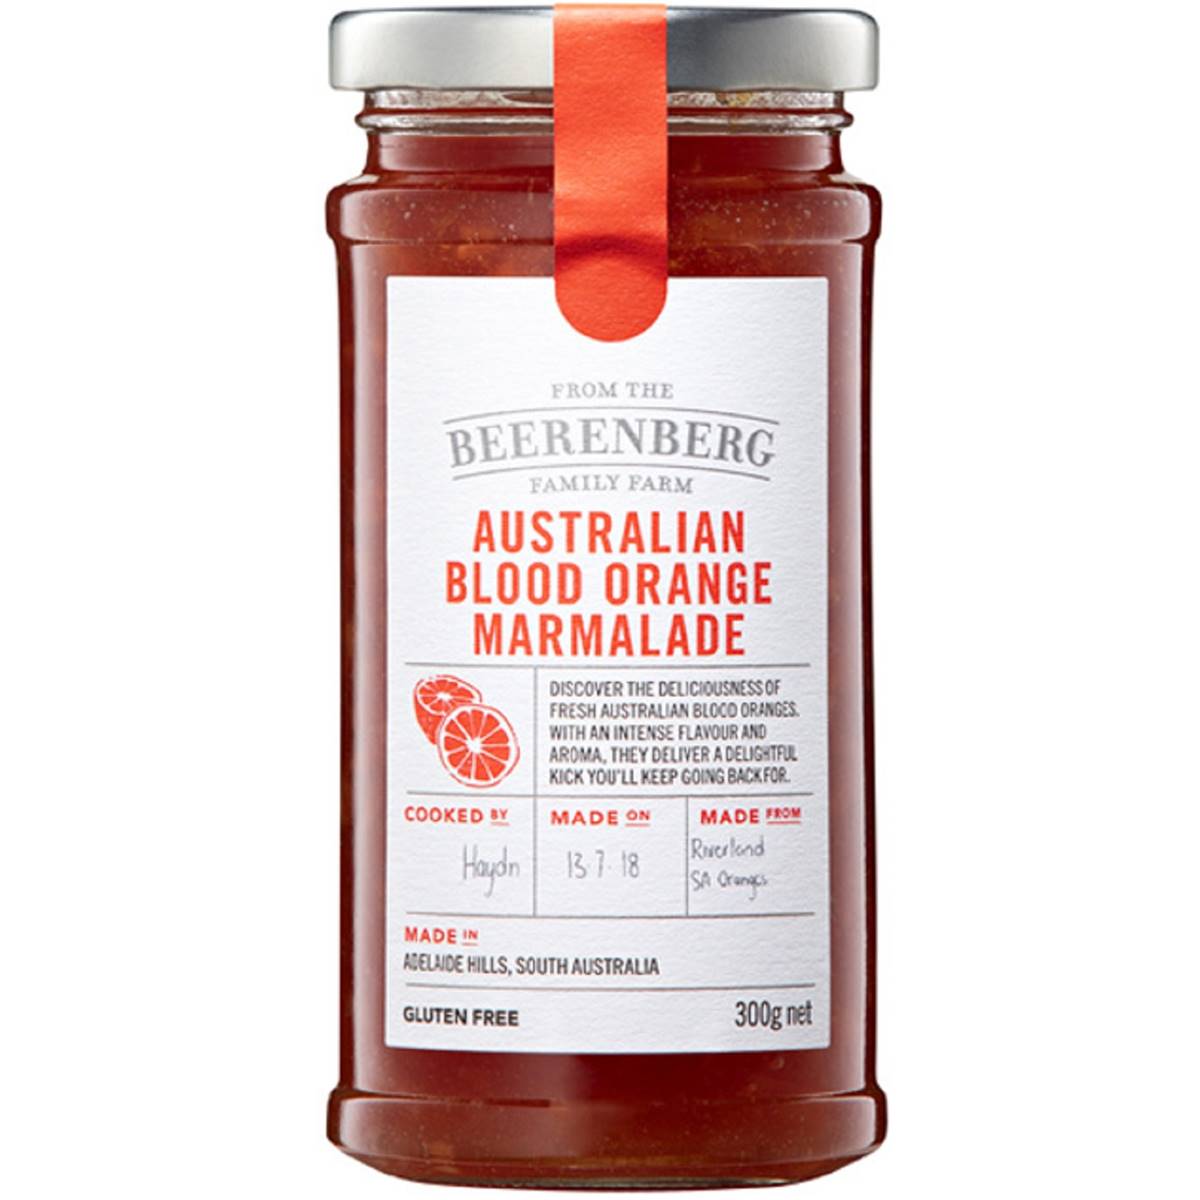 Beerenberg Marmalade Blood Orange 300g